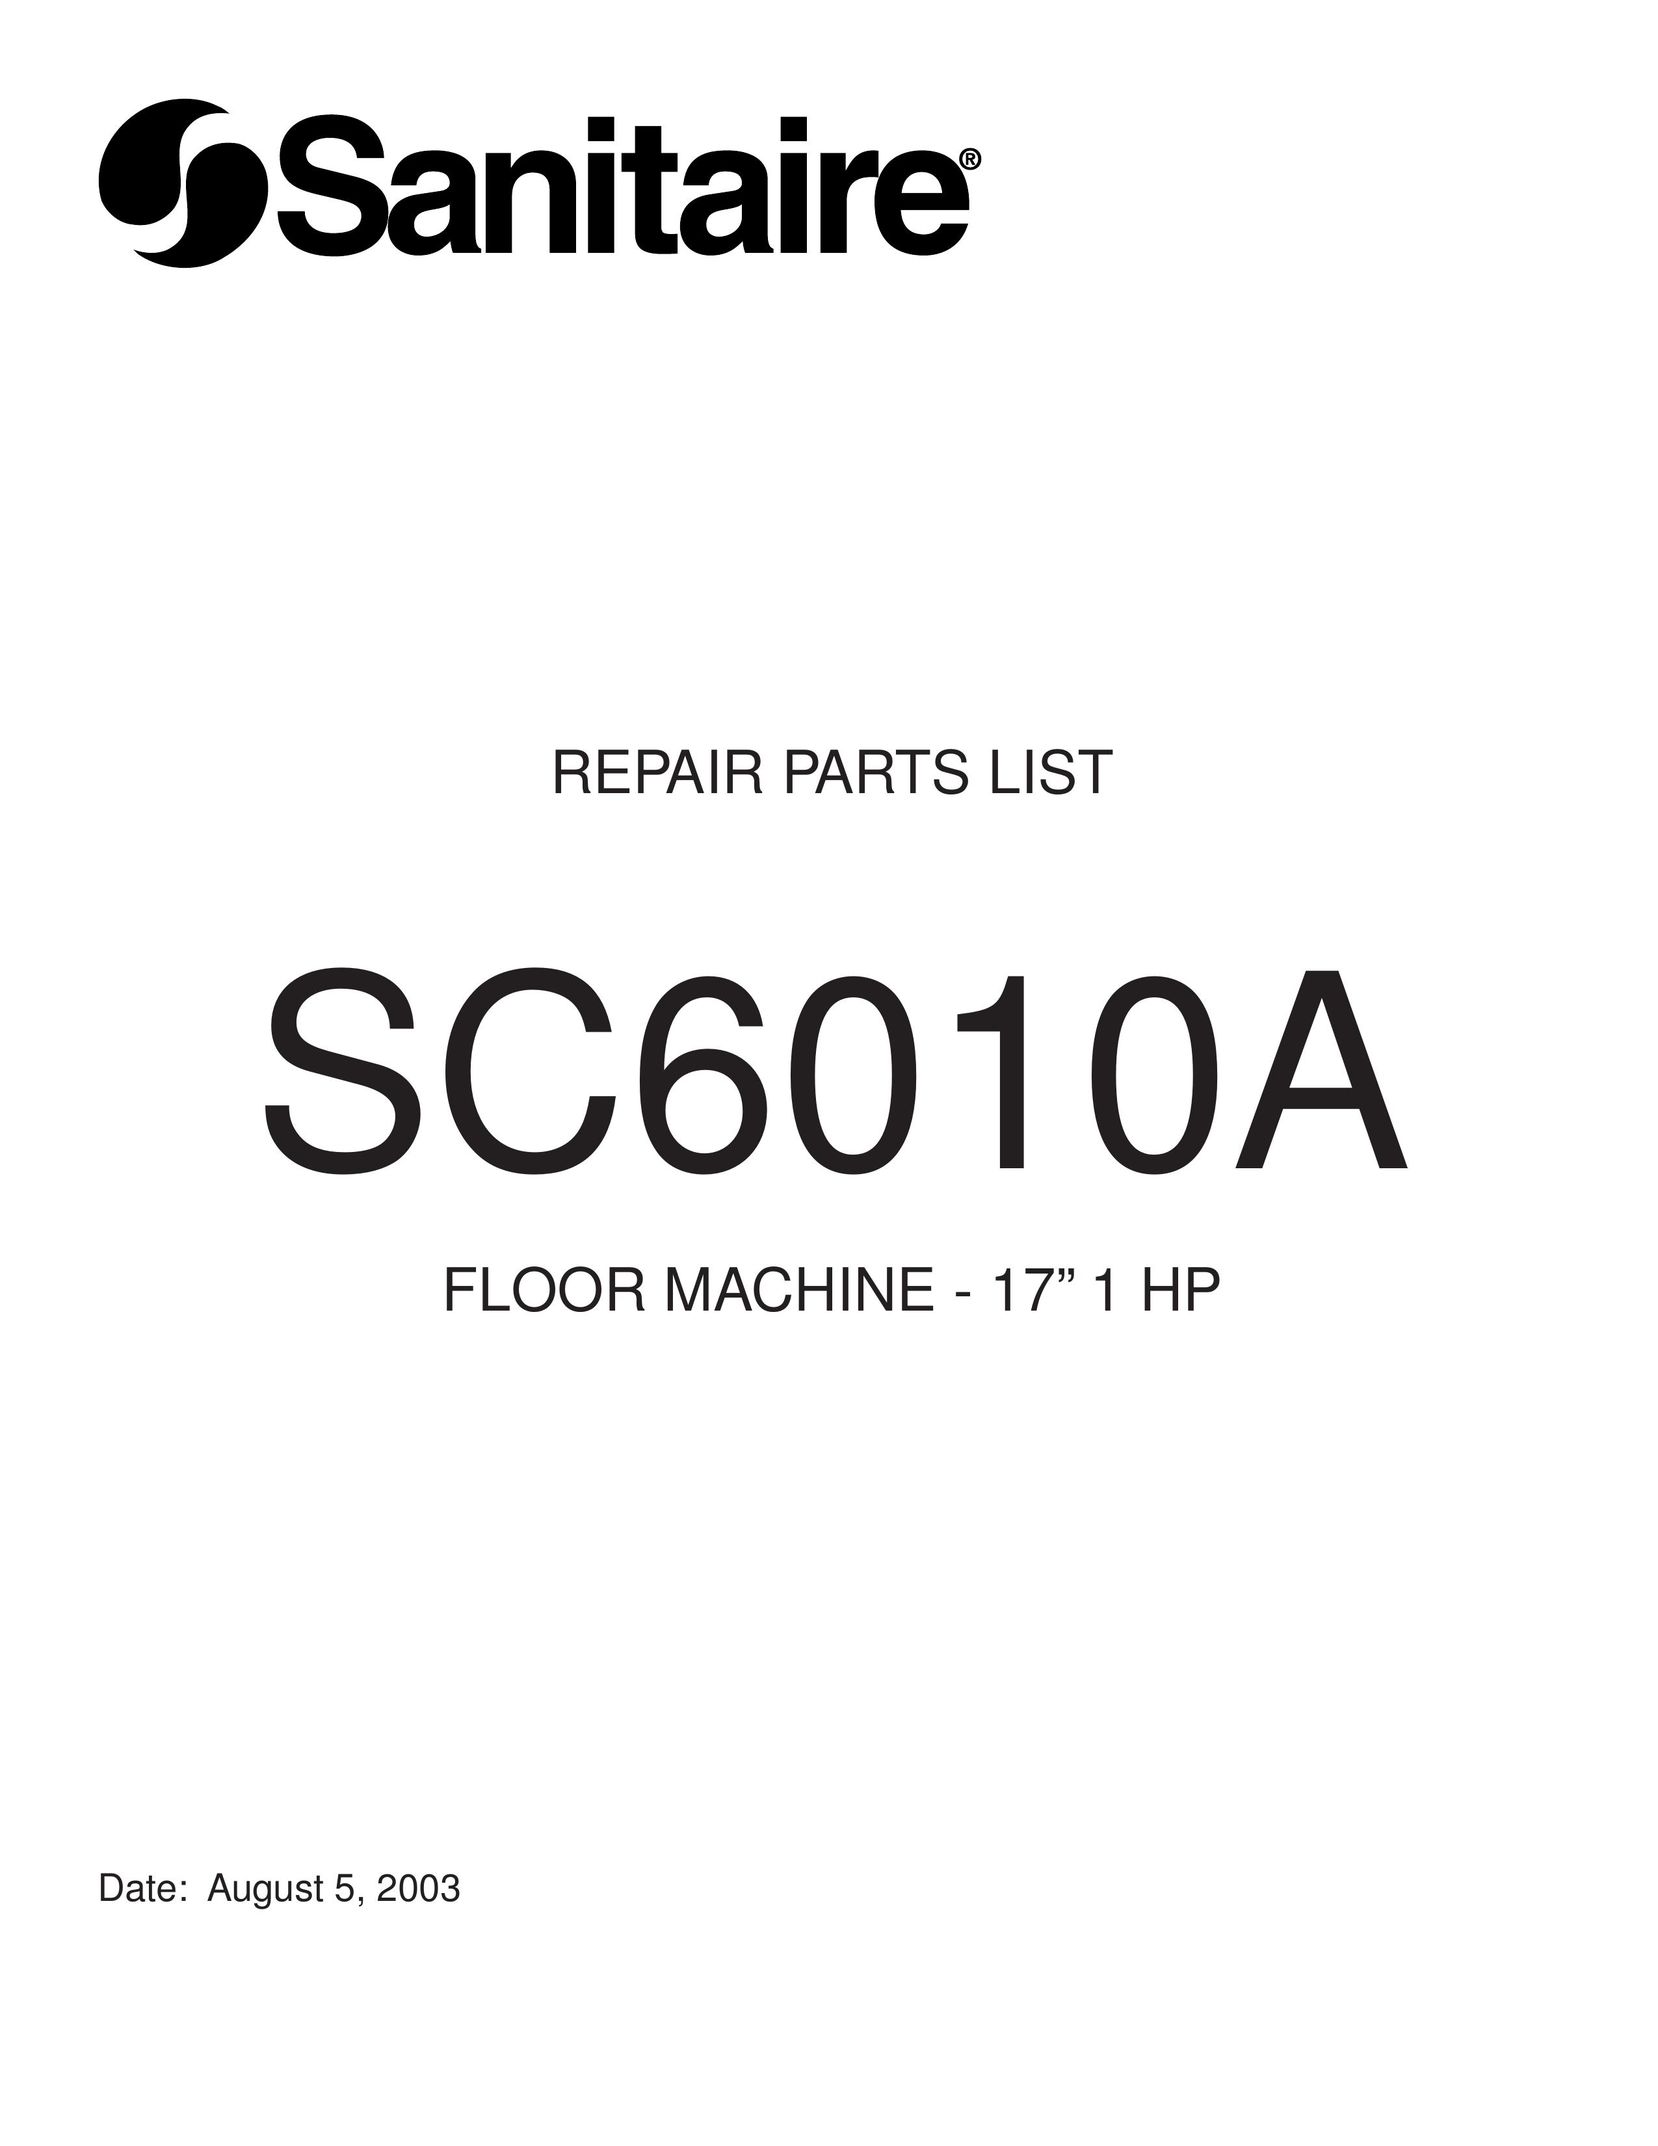 Sanitaire SC6010A Sander User Manual